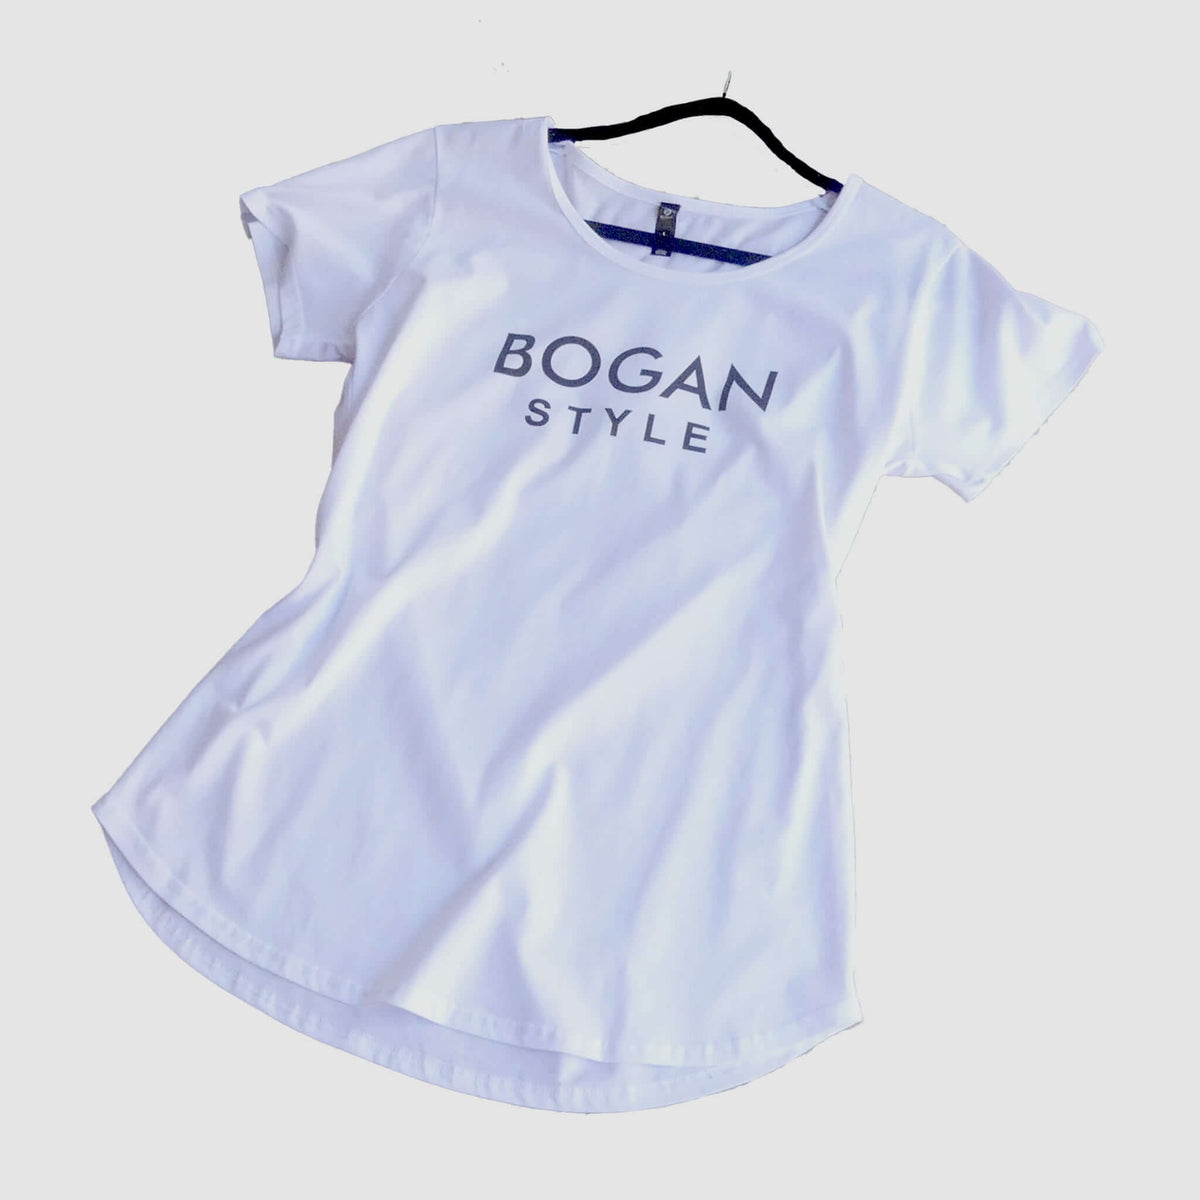 White Bogan Style women's t shirt